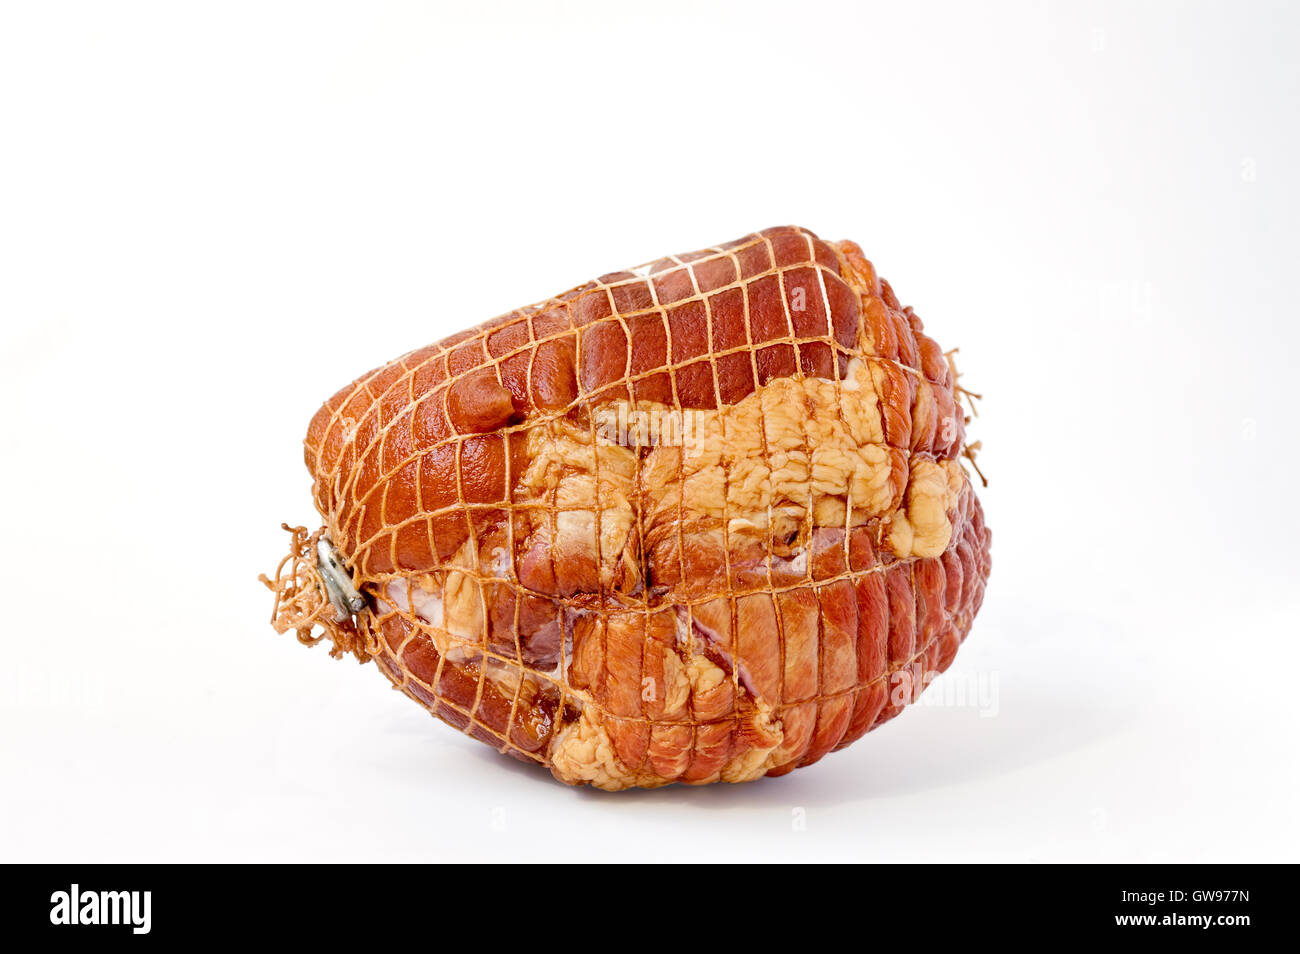 Smoked boneless pork ham hock wrapped in netting isolated on white Stock Photo